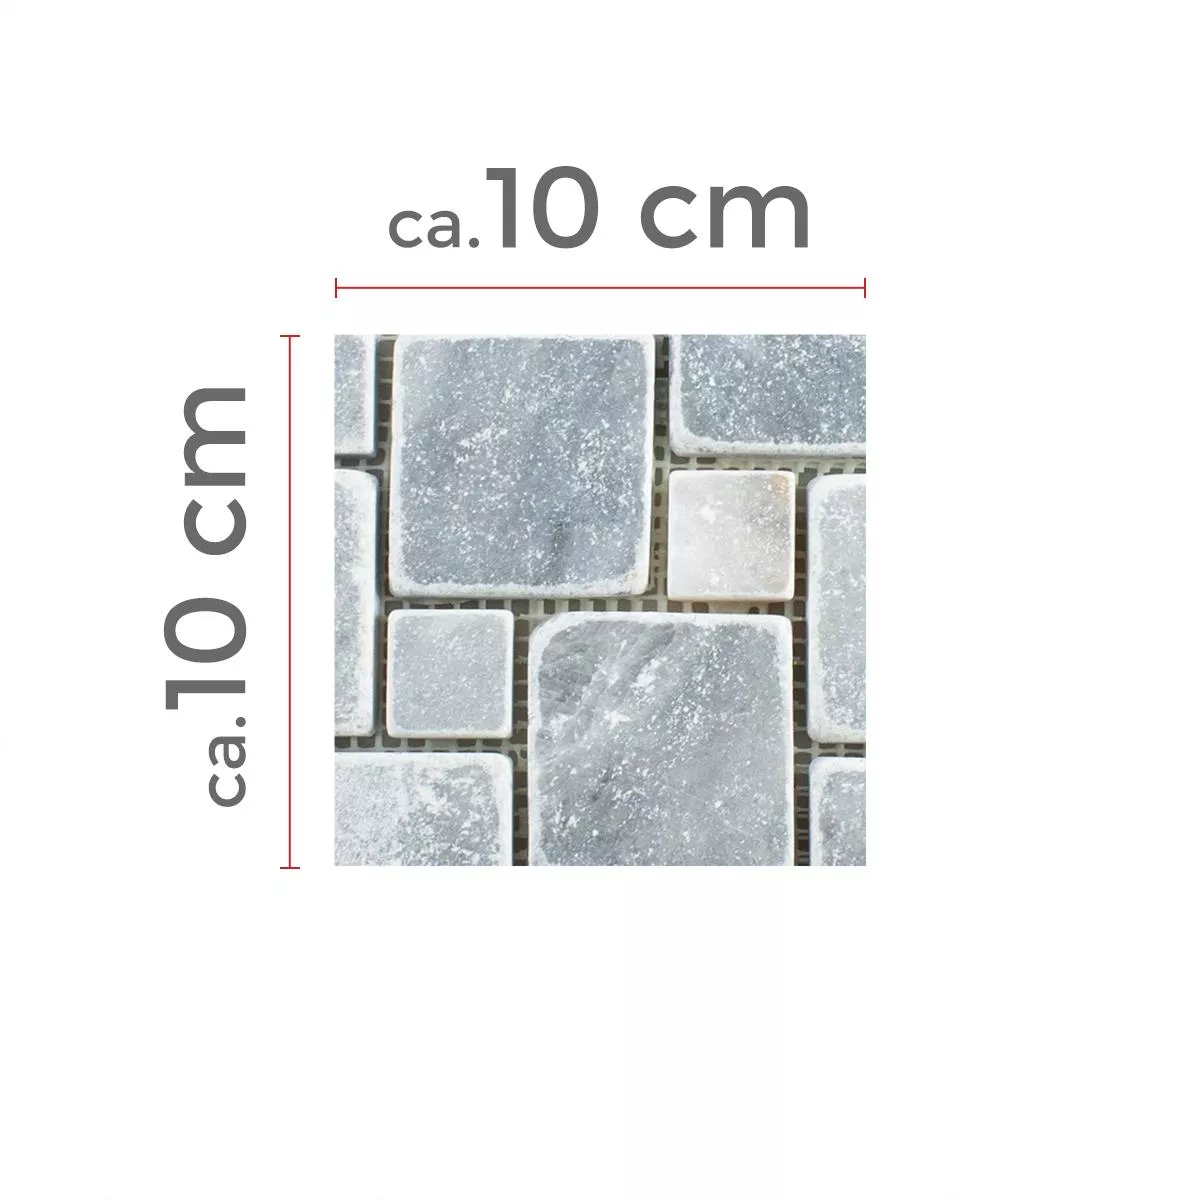 Sample Natural Stone Marble Mosaic Tiles Kilkenny Light Grey